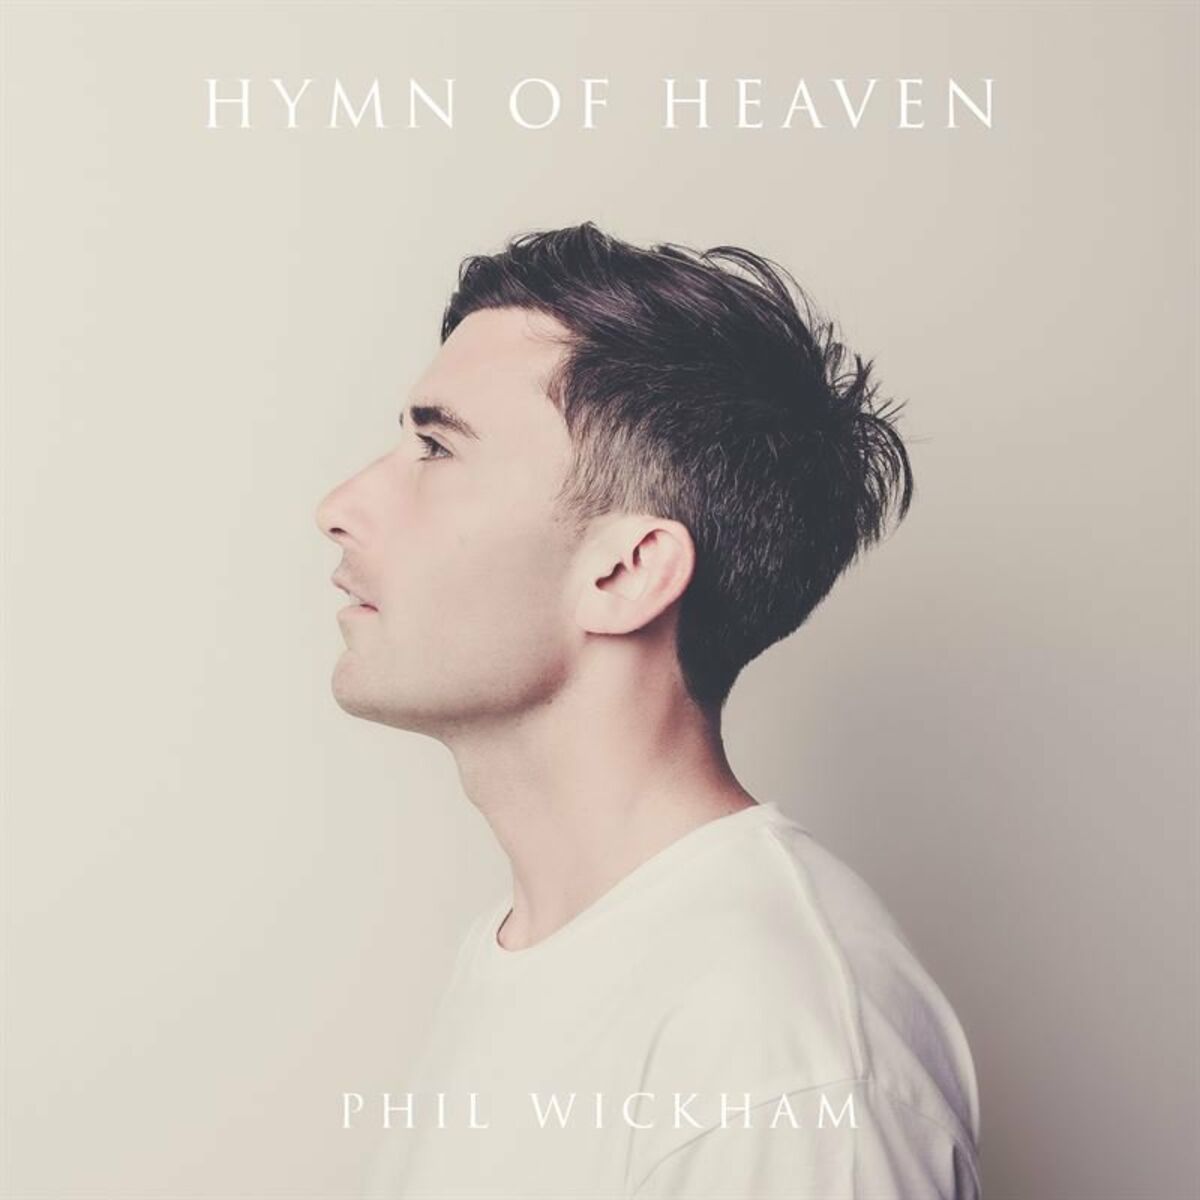 Phil Wickham: albums, songs, playlists